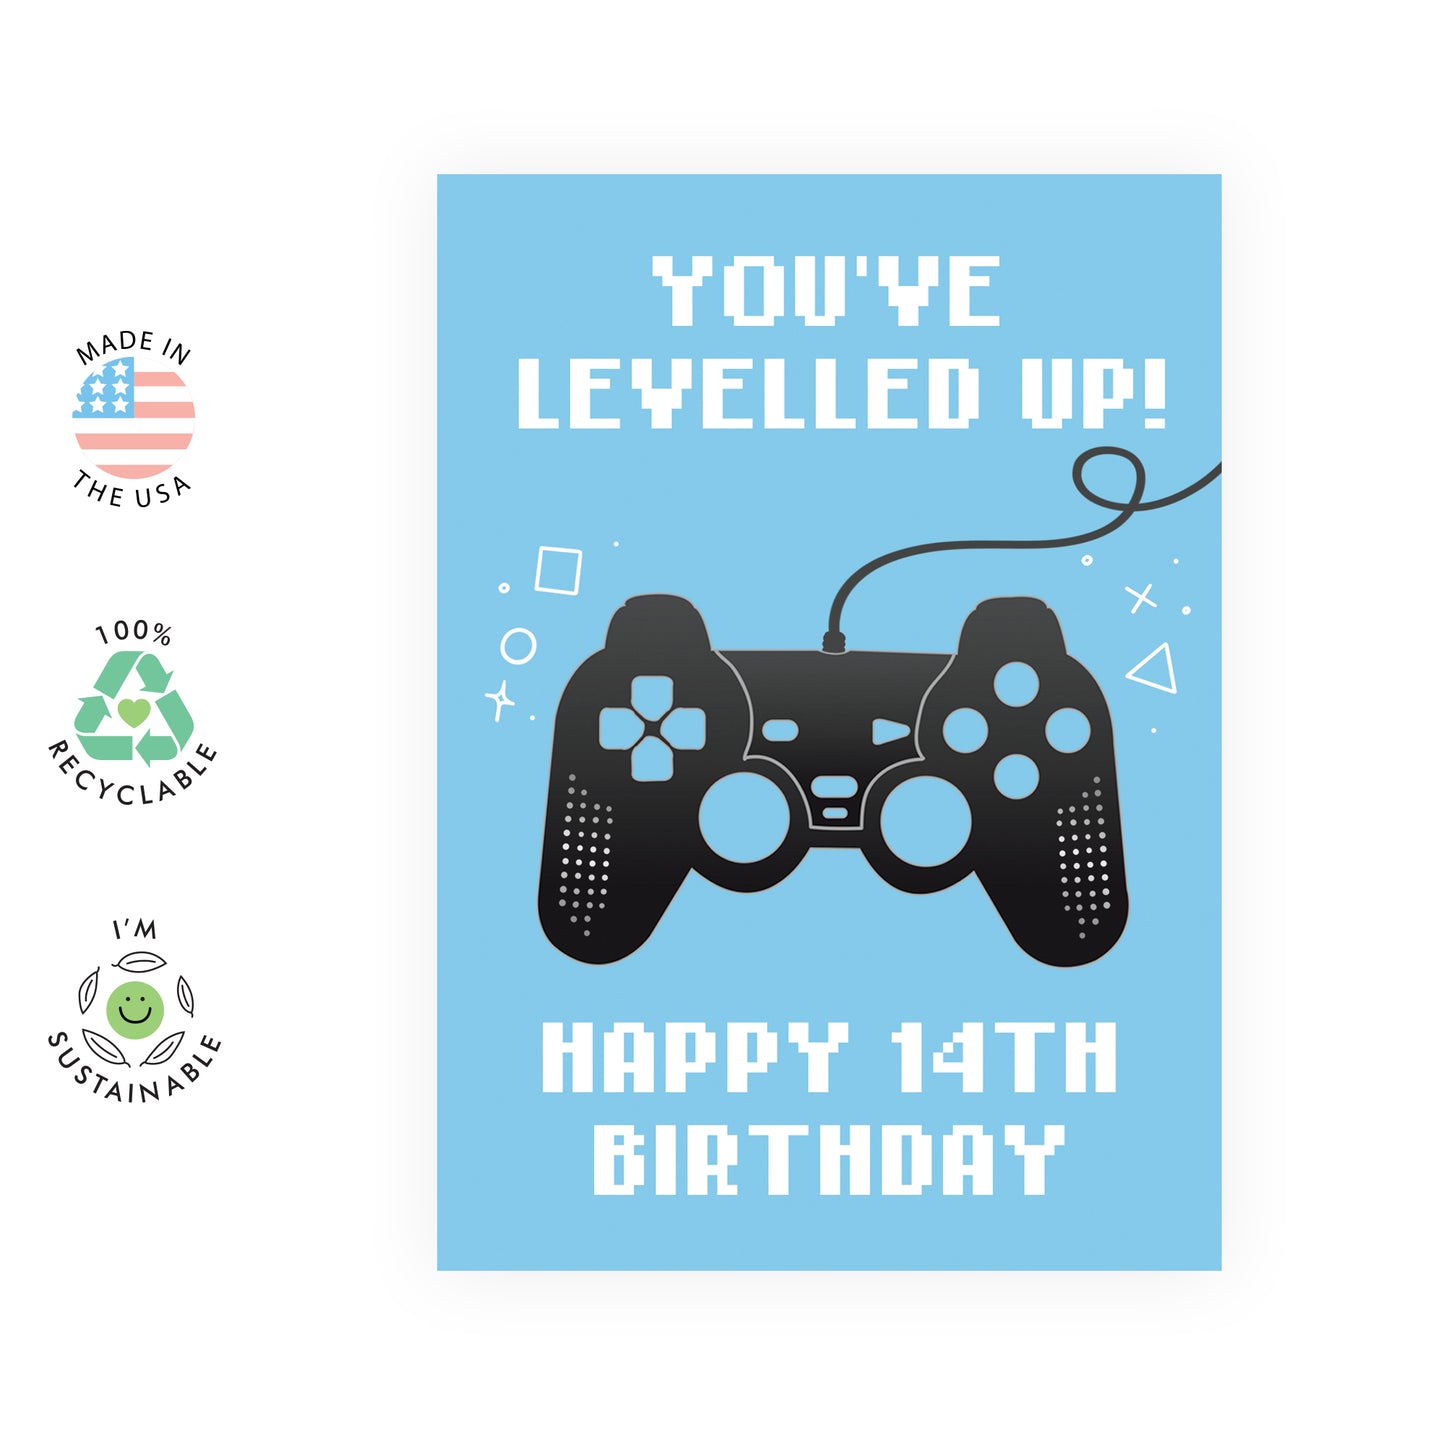 Gamer Birthday Card - Happy 14th Birthday - For Him Her Boys Girls